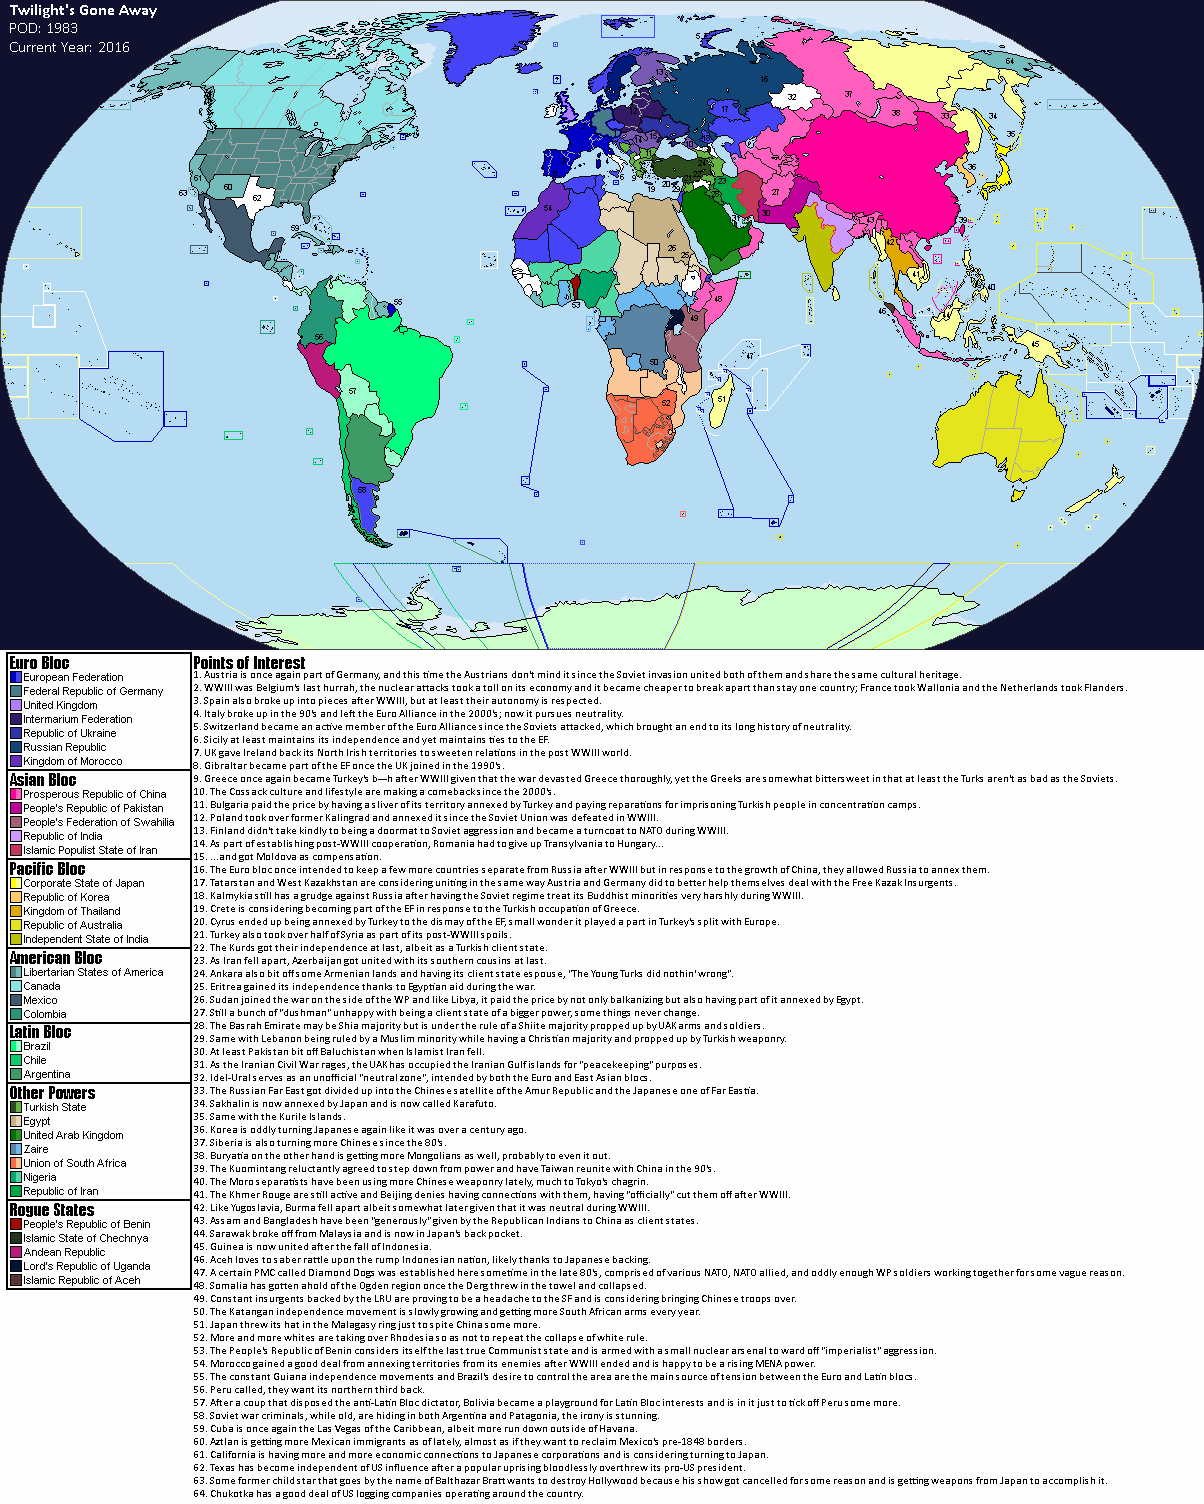 WORLD MAP by Kitsunegamis on DeviantArt